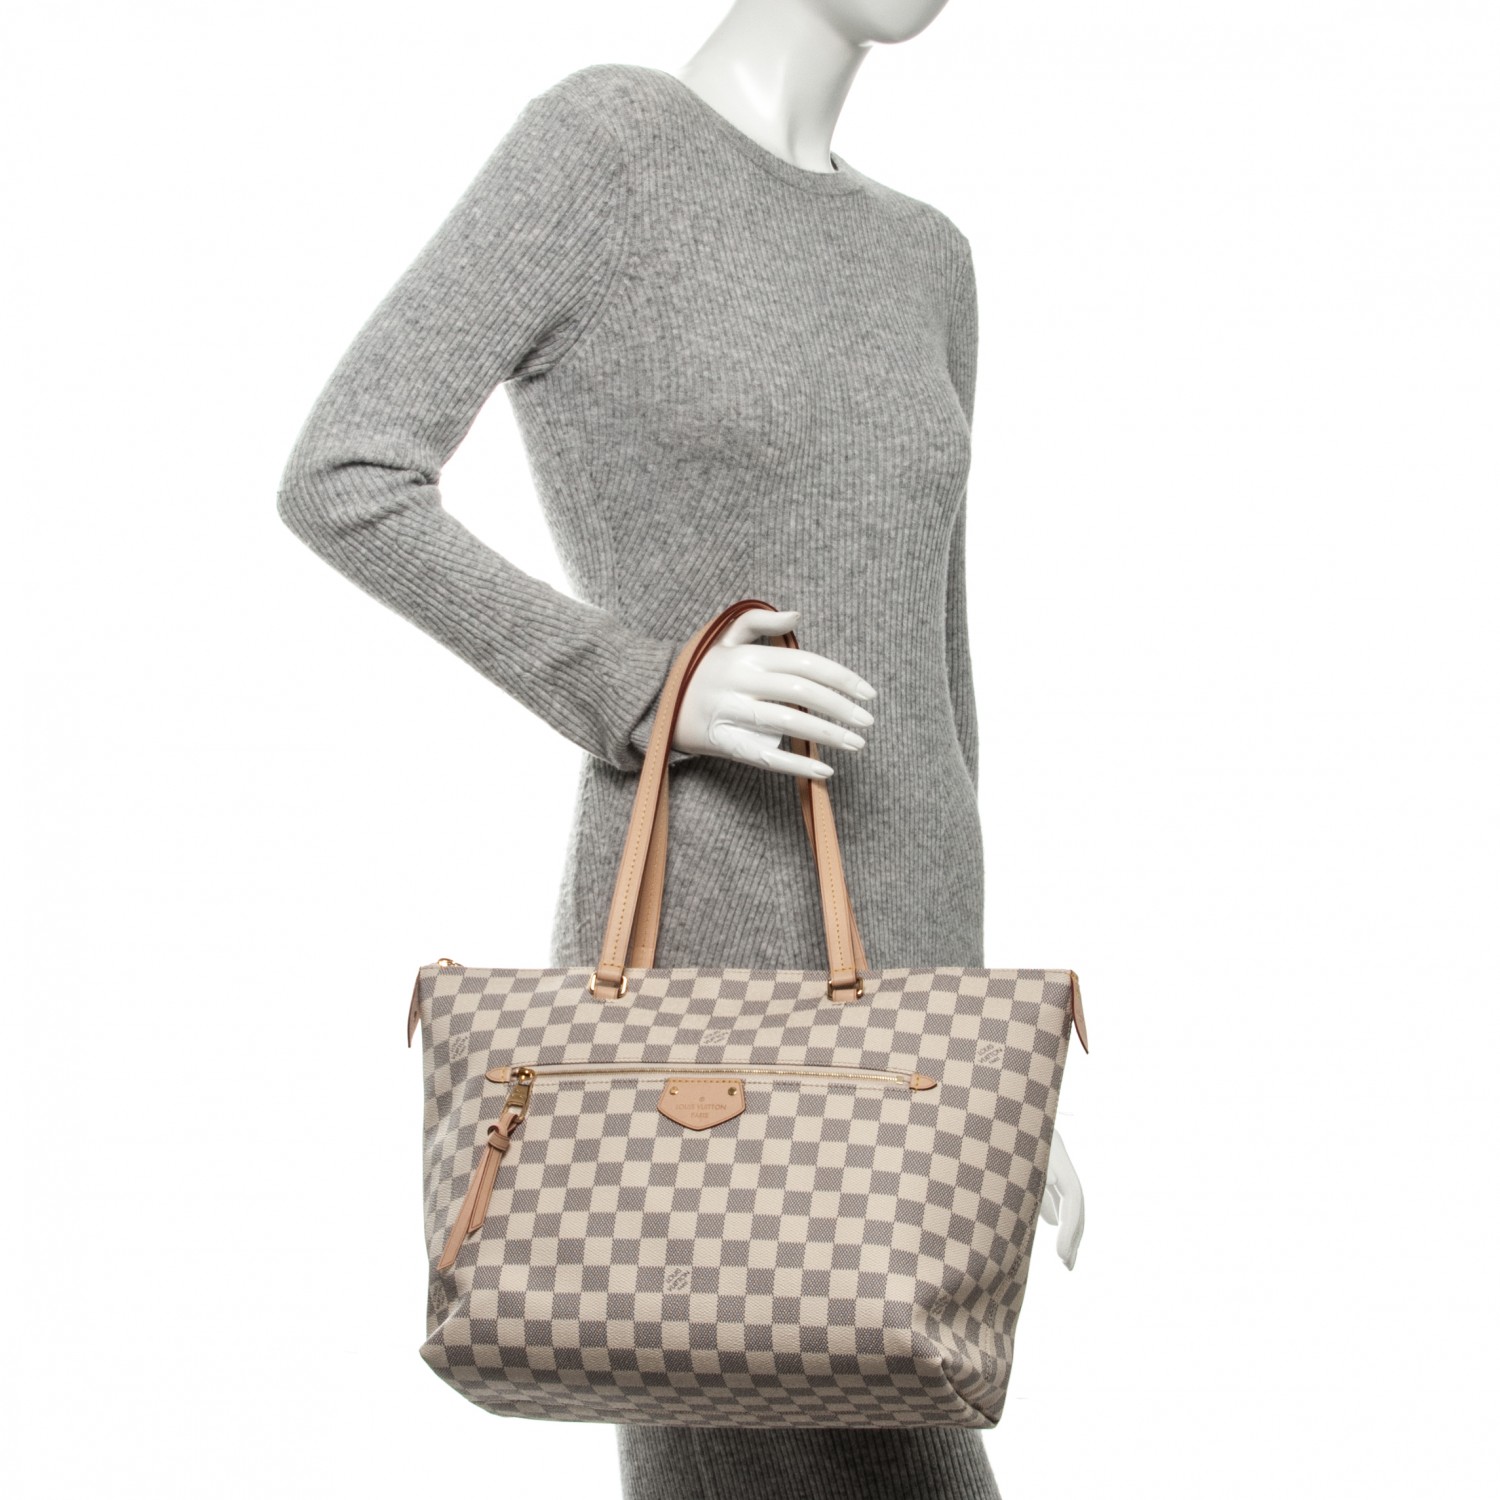 Discontinued iena pm Louis Vuitton crossbody bag